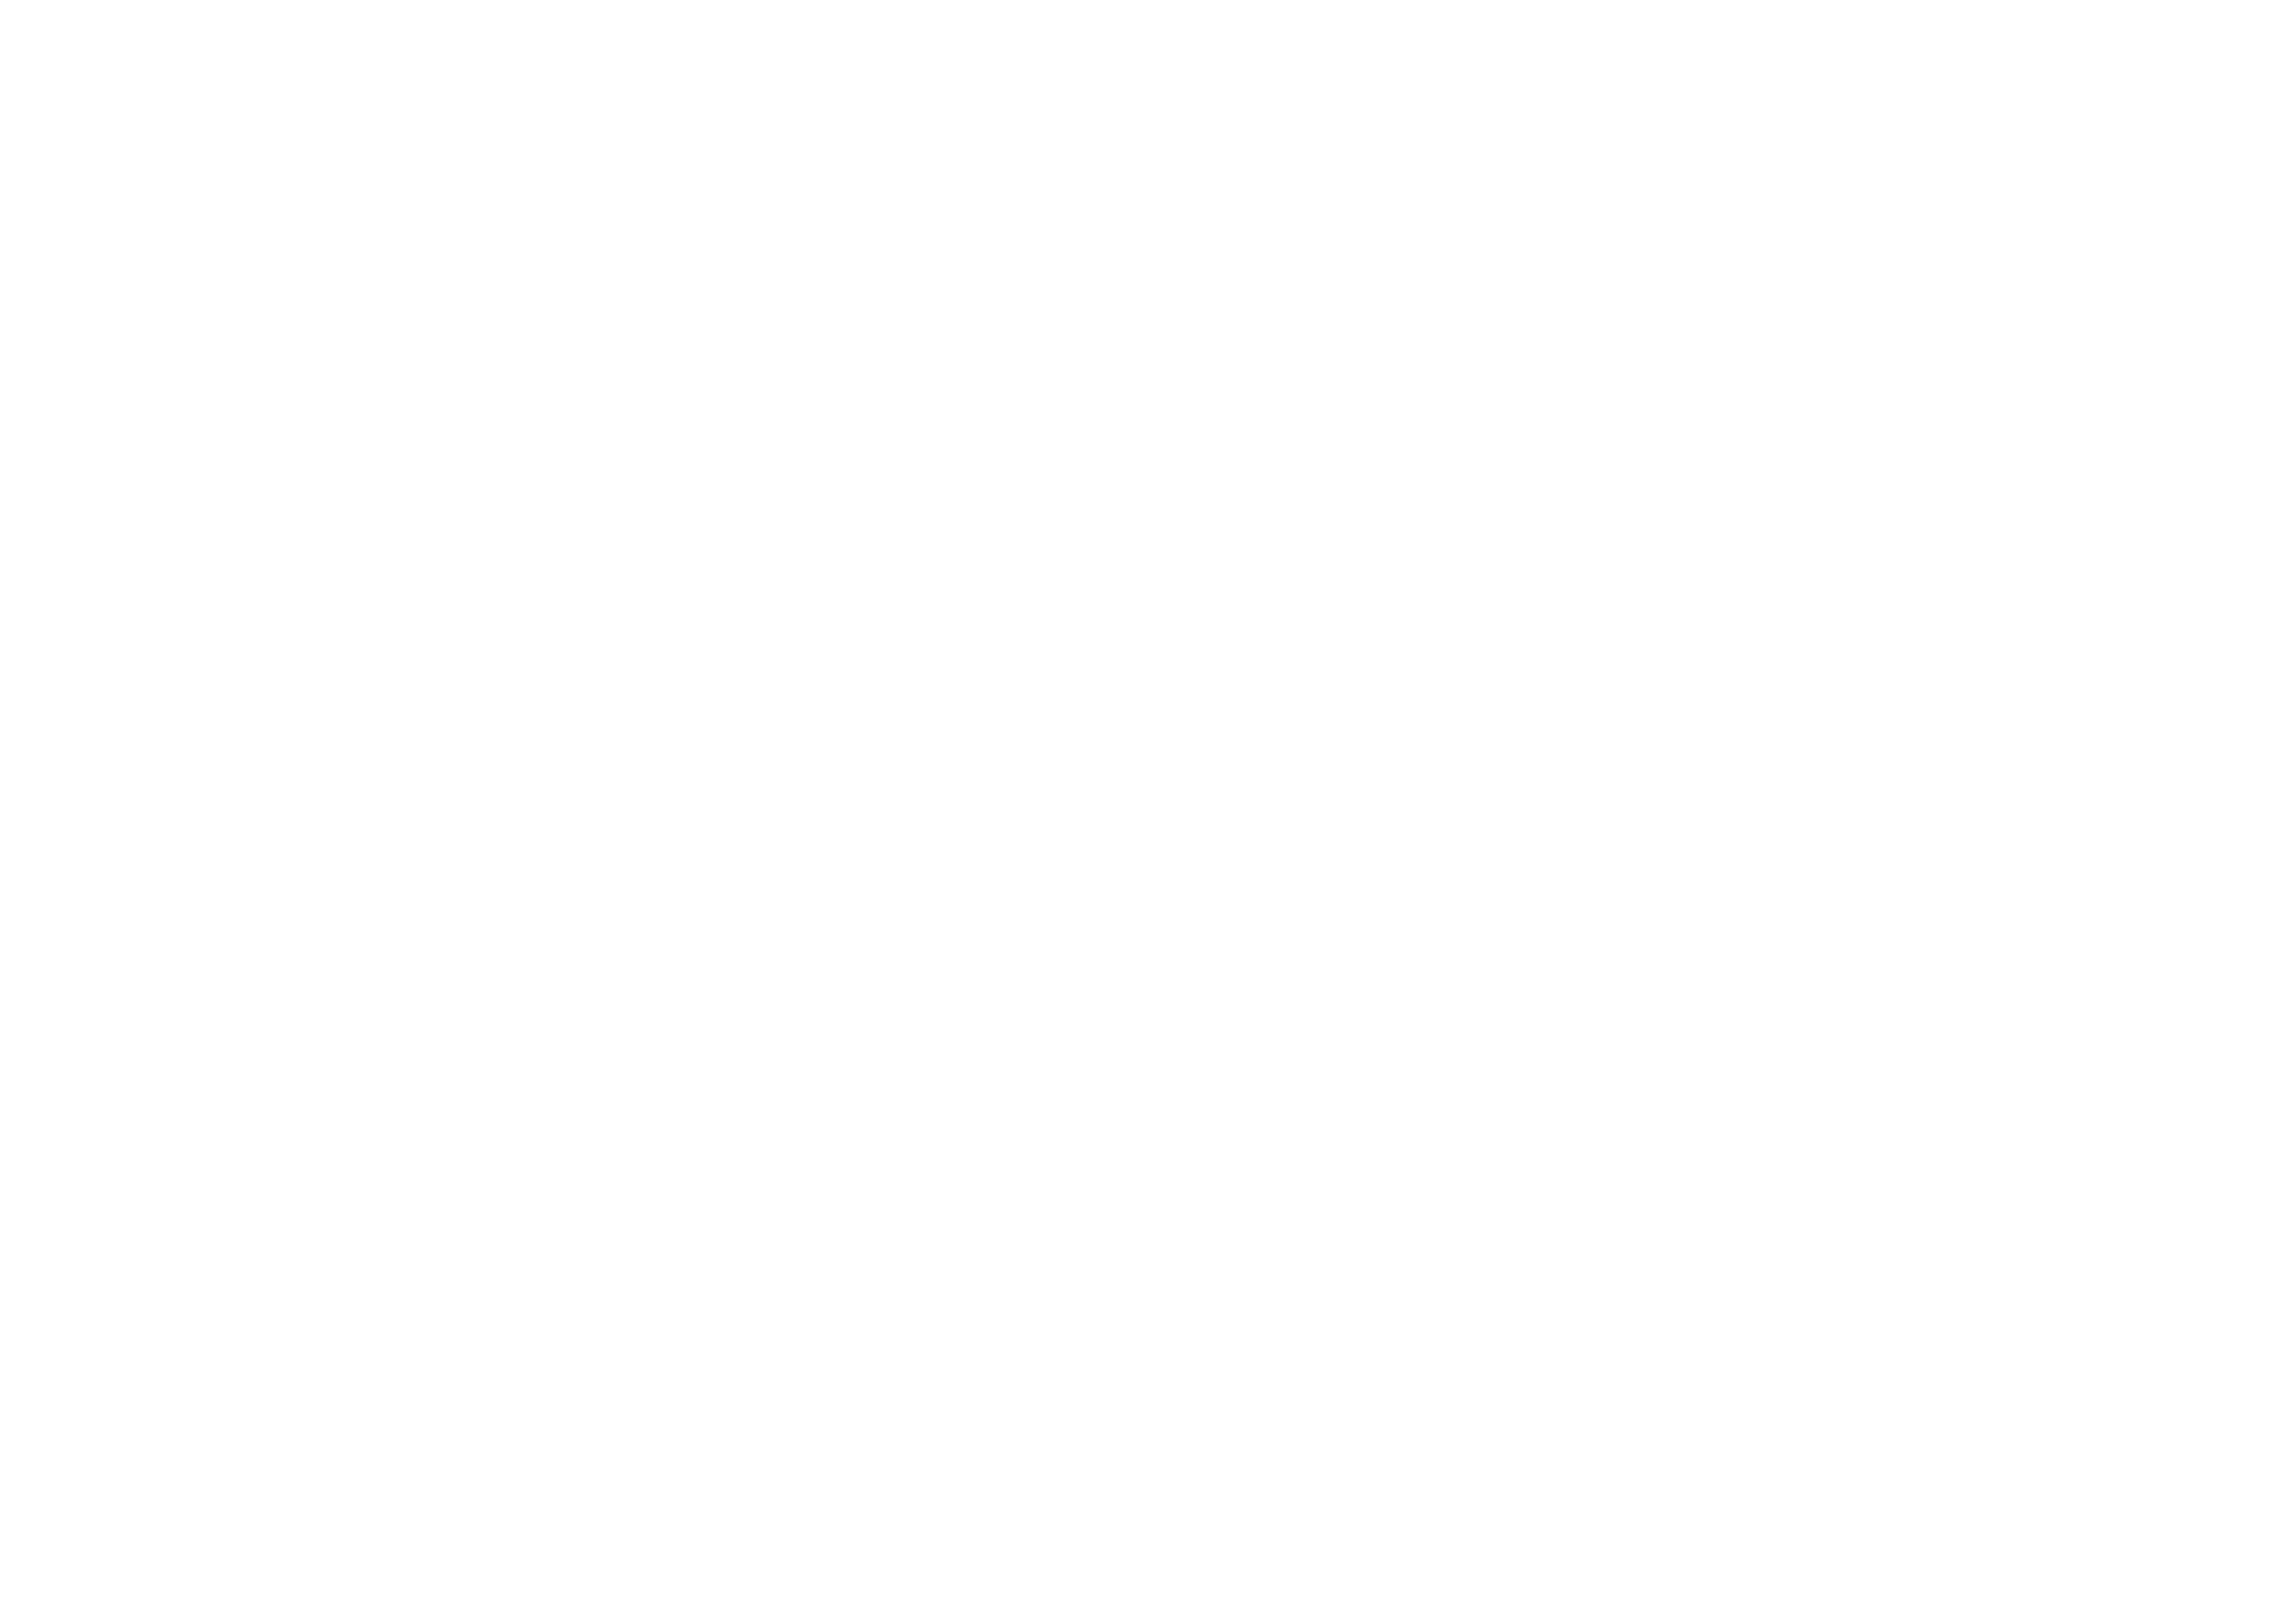 Speyside Brewery Logo White